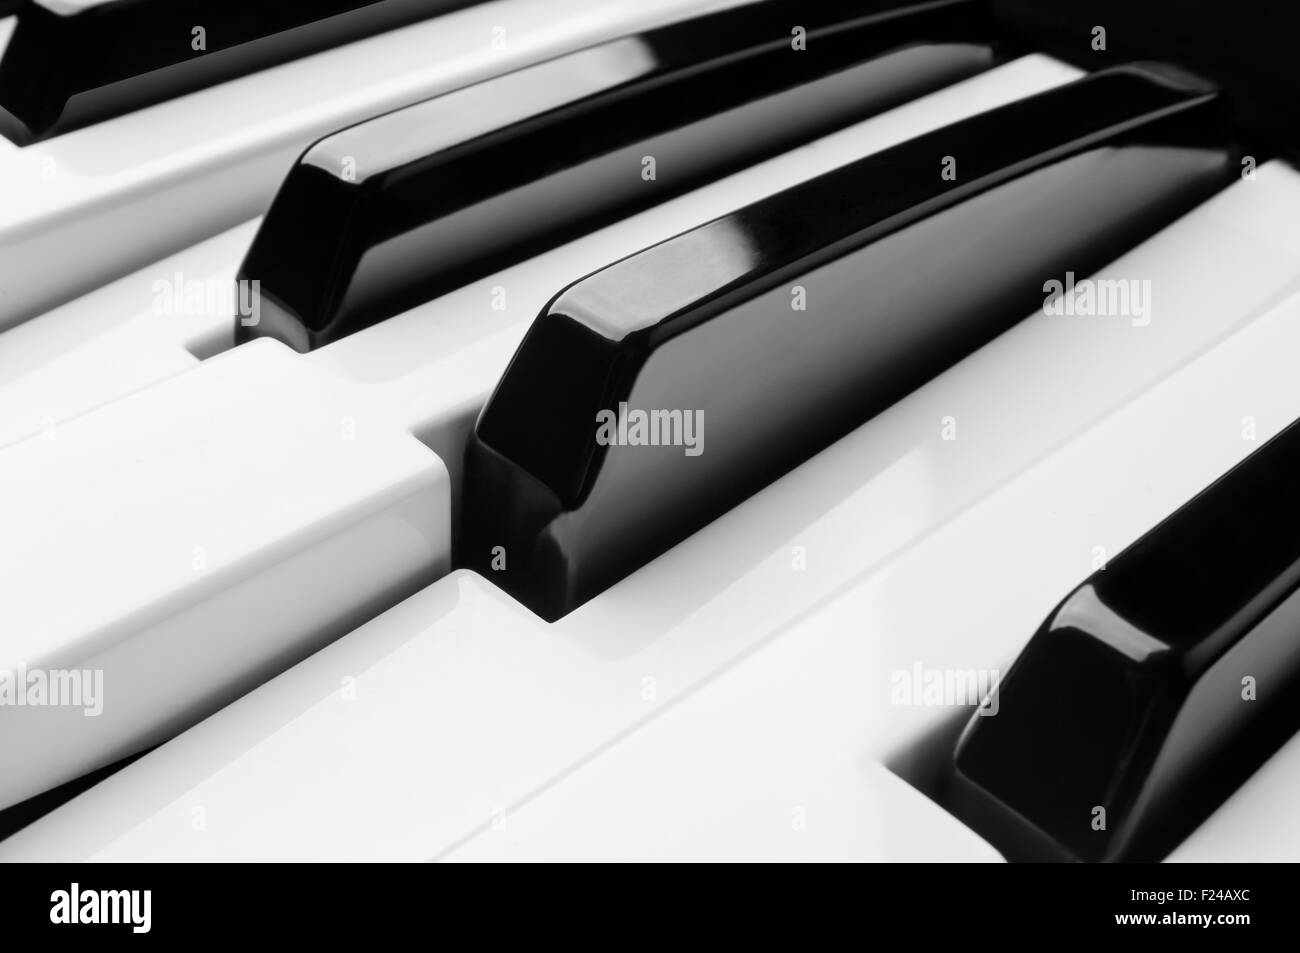 Piano Keys close up black & white Stock Photo